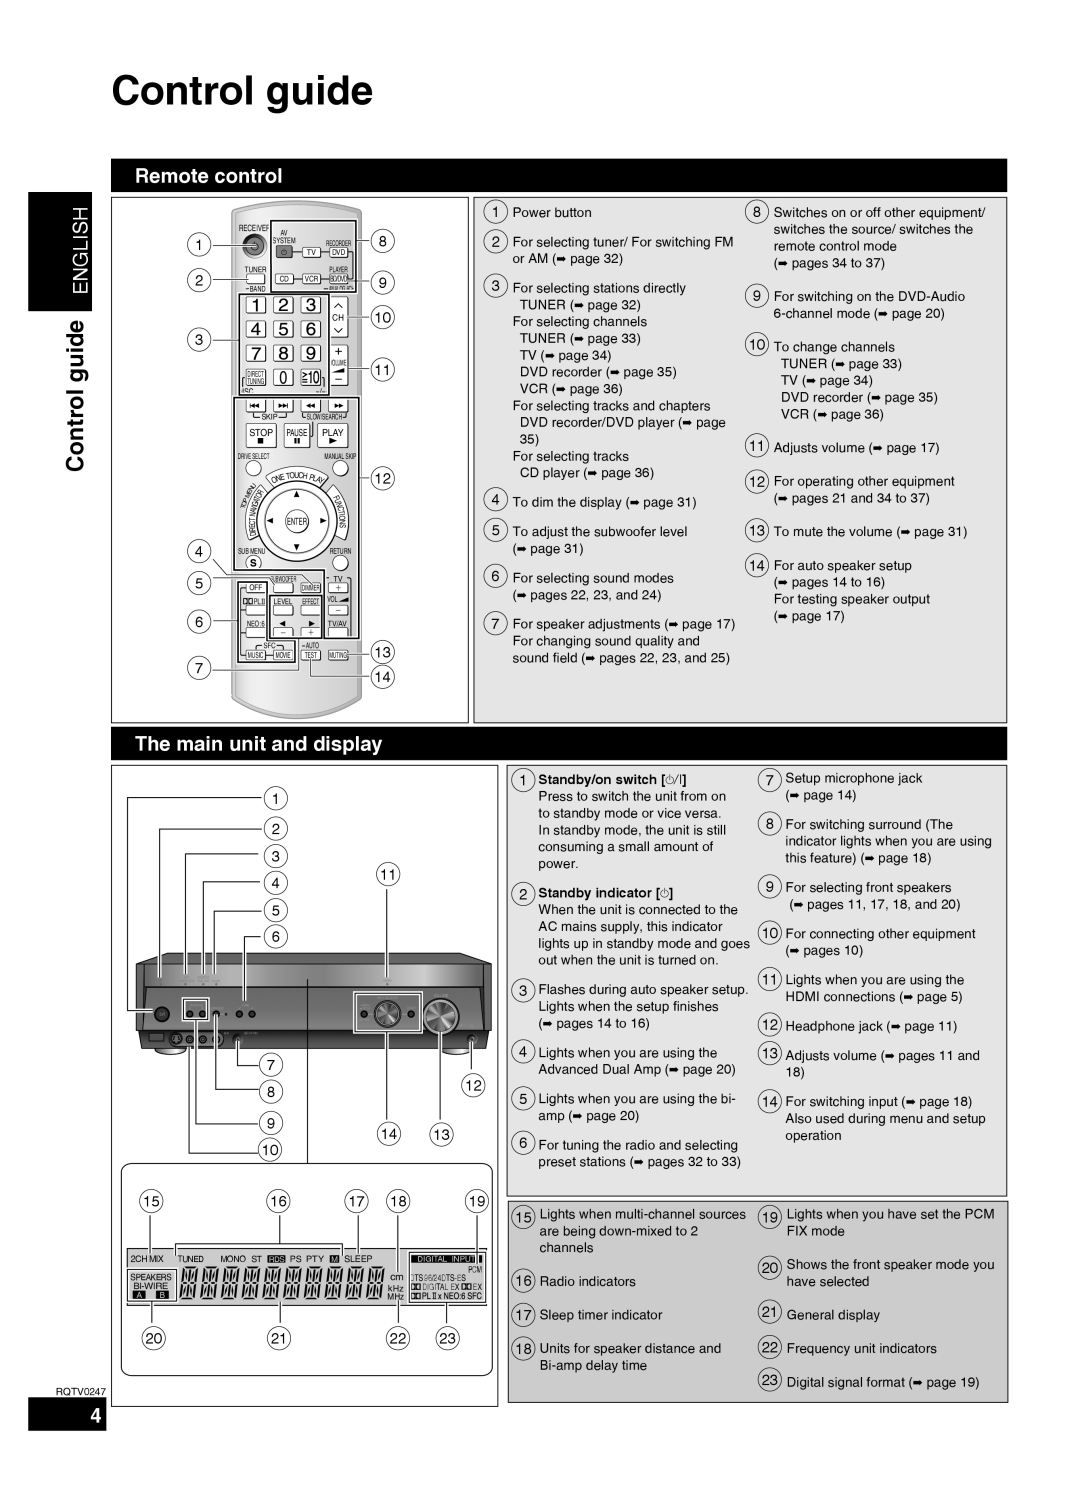 Panasonic SA-XR59 manual Control guide ENGLISH, Remote control, The main unit and display 